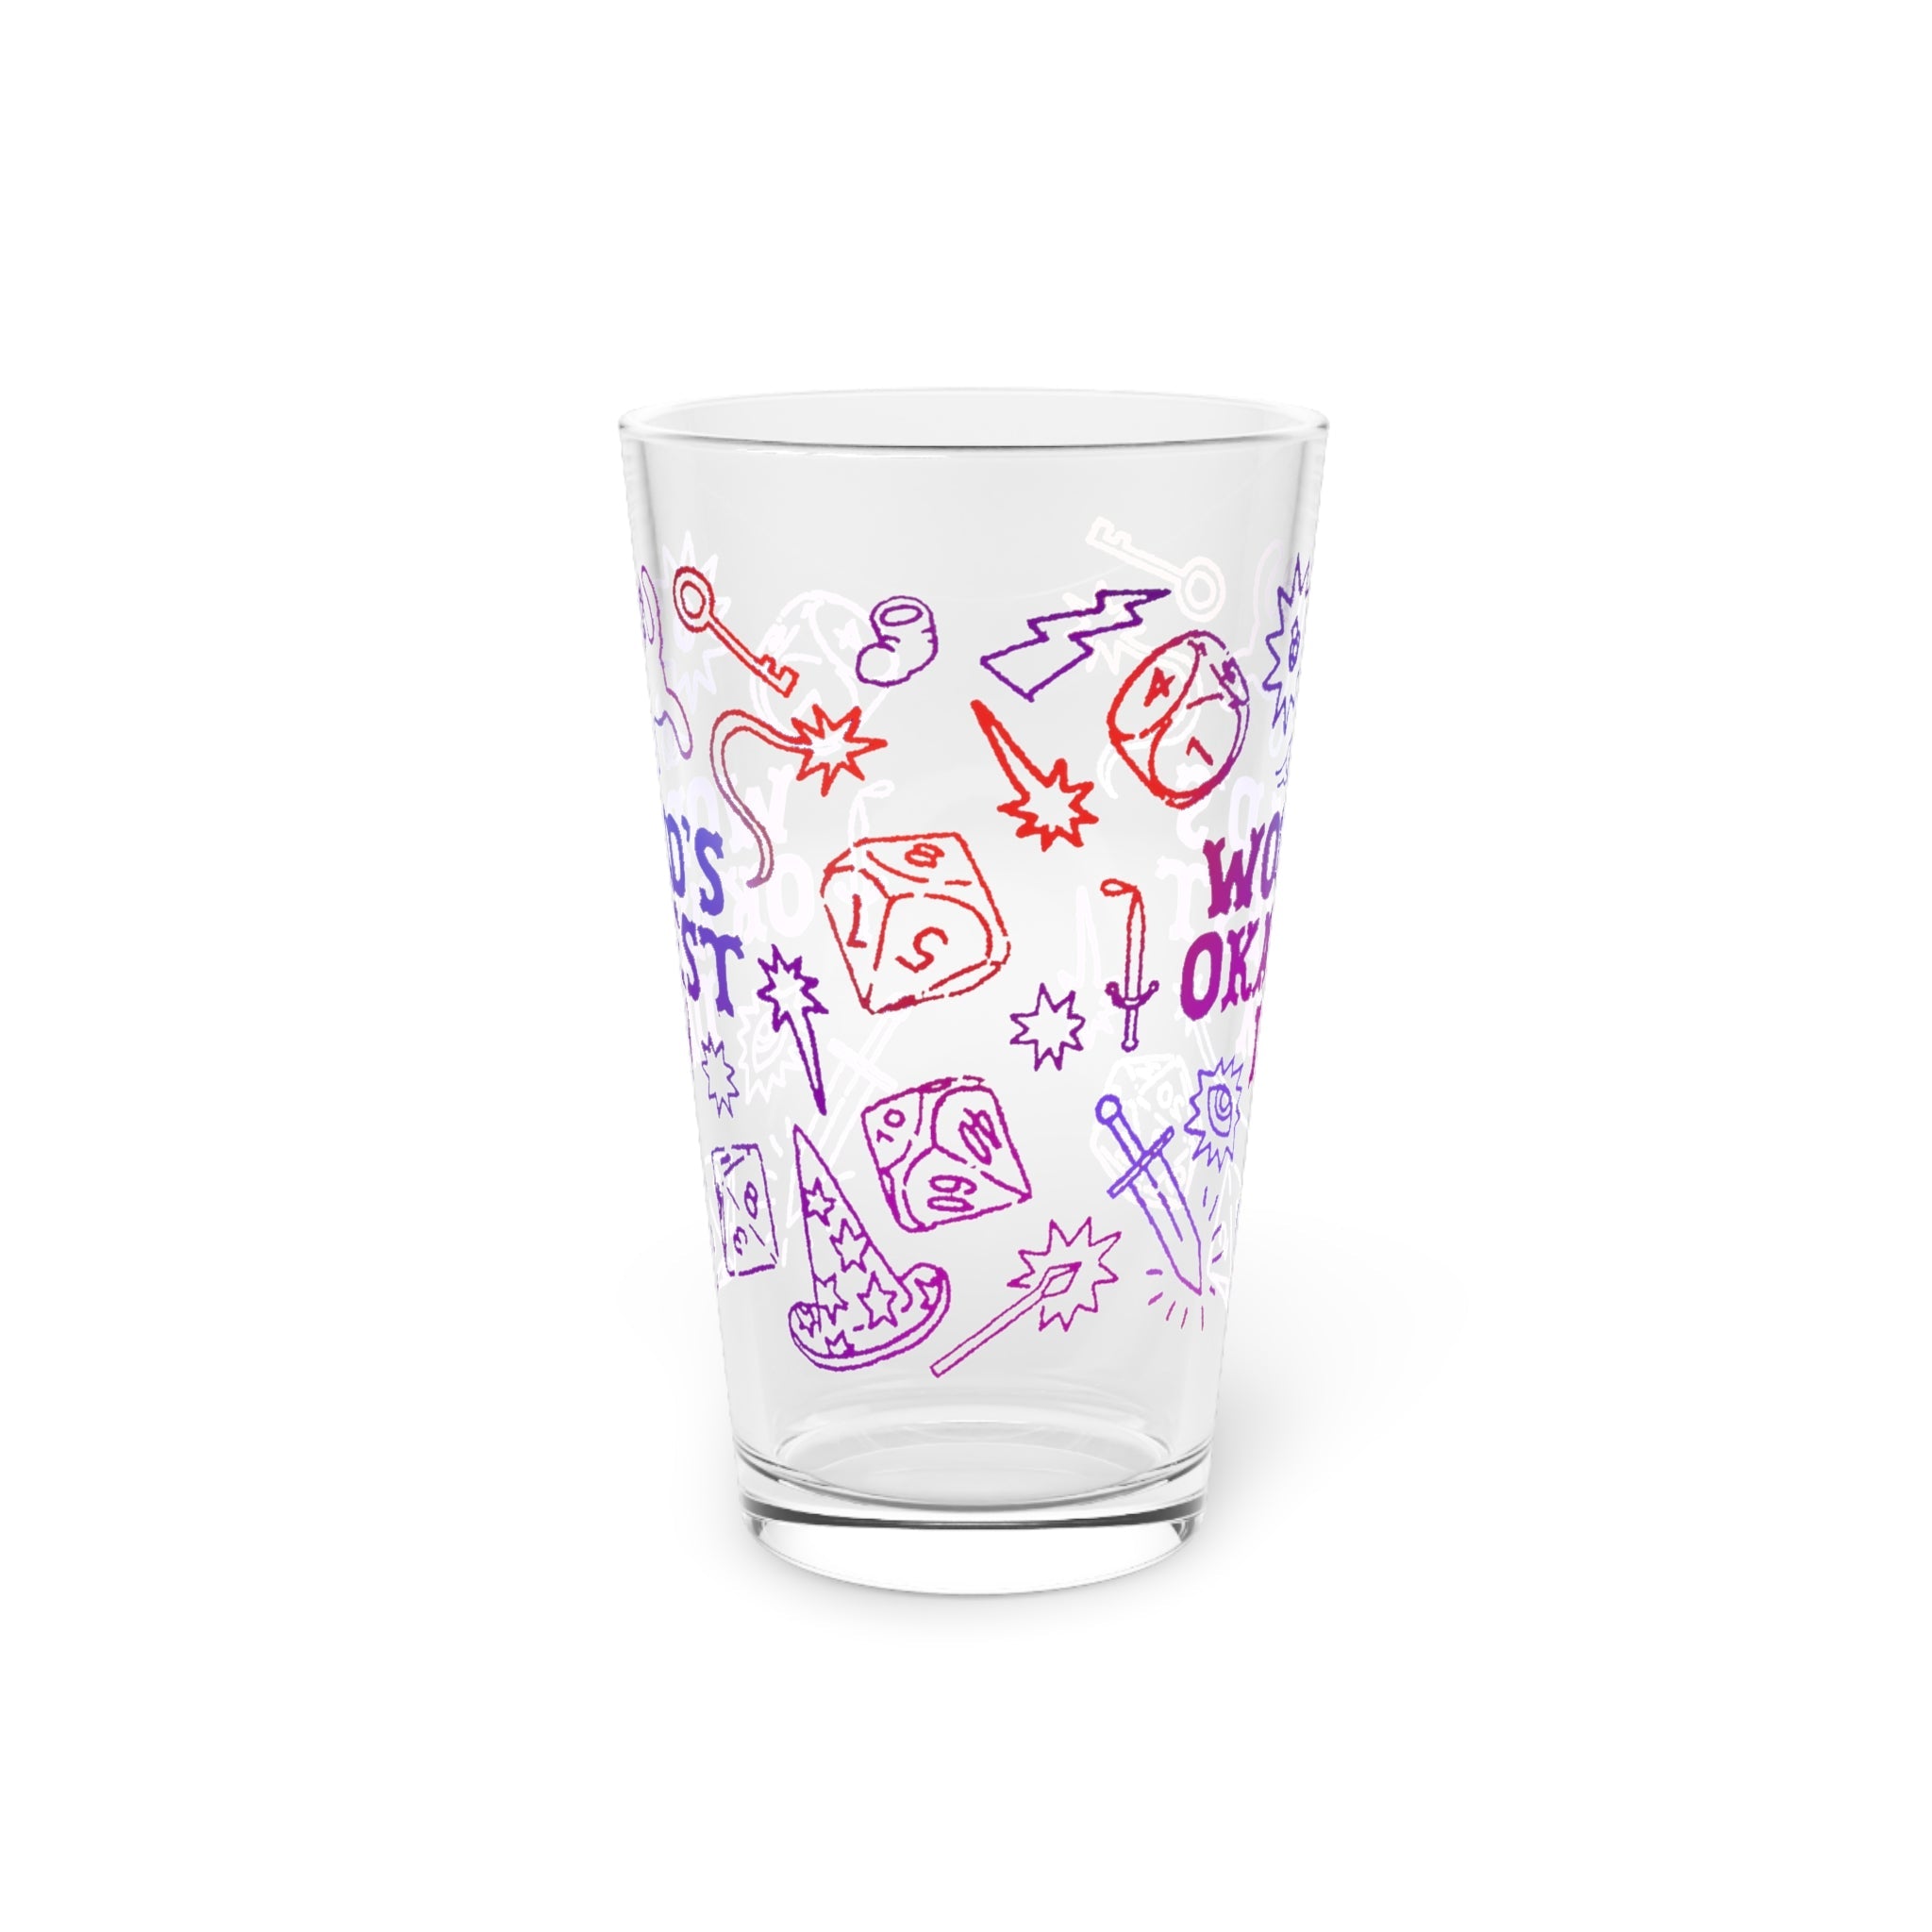 World's Okayest DM | Pint Glass, 16oz - Mug - Ace of Gnomes - 25498585257206325253